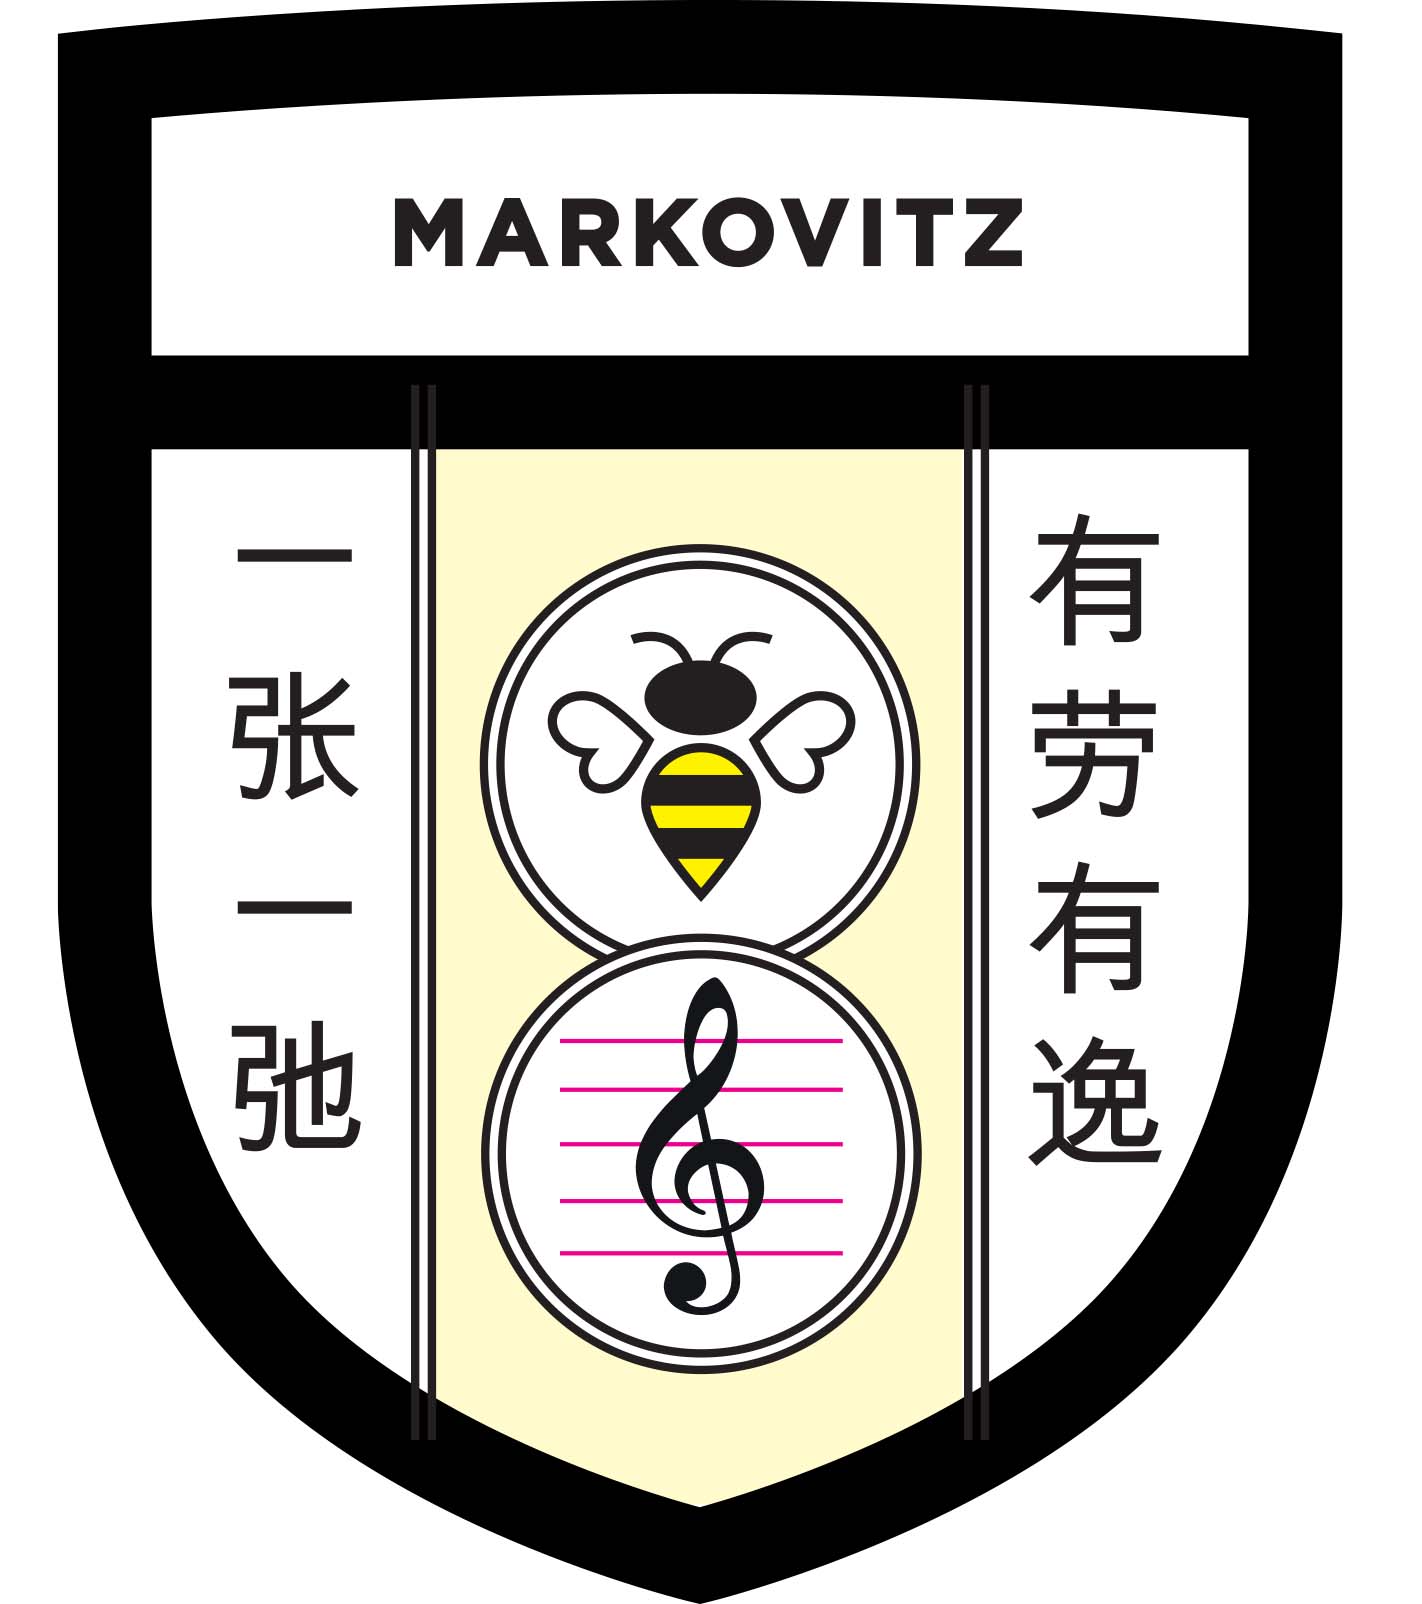 Markovitz Shield